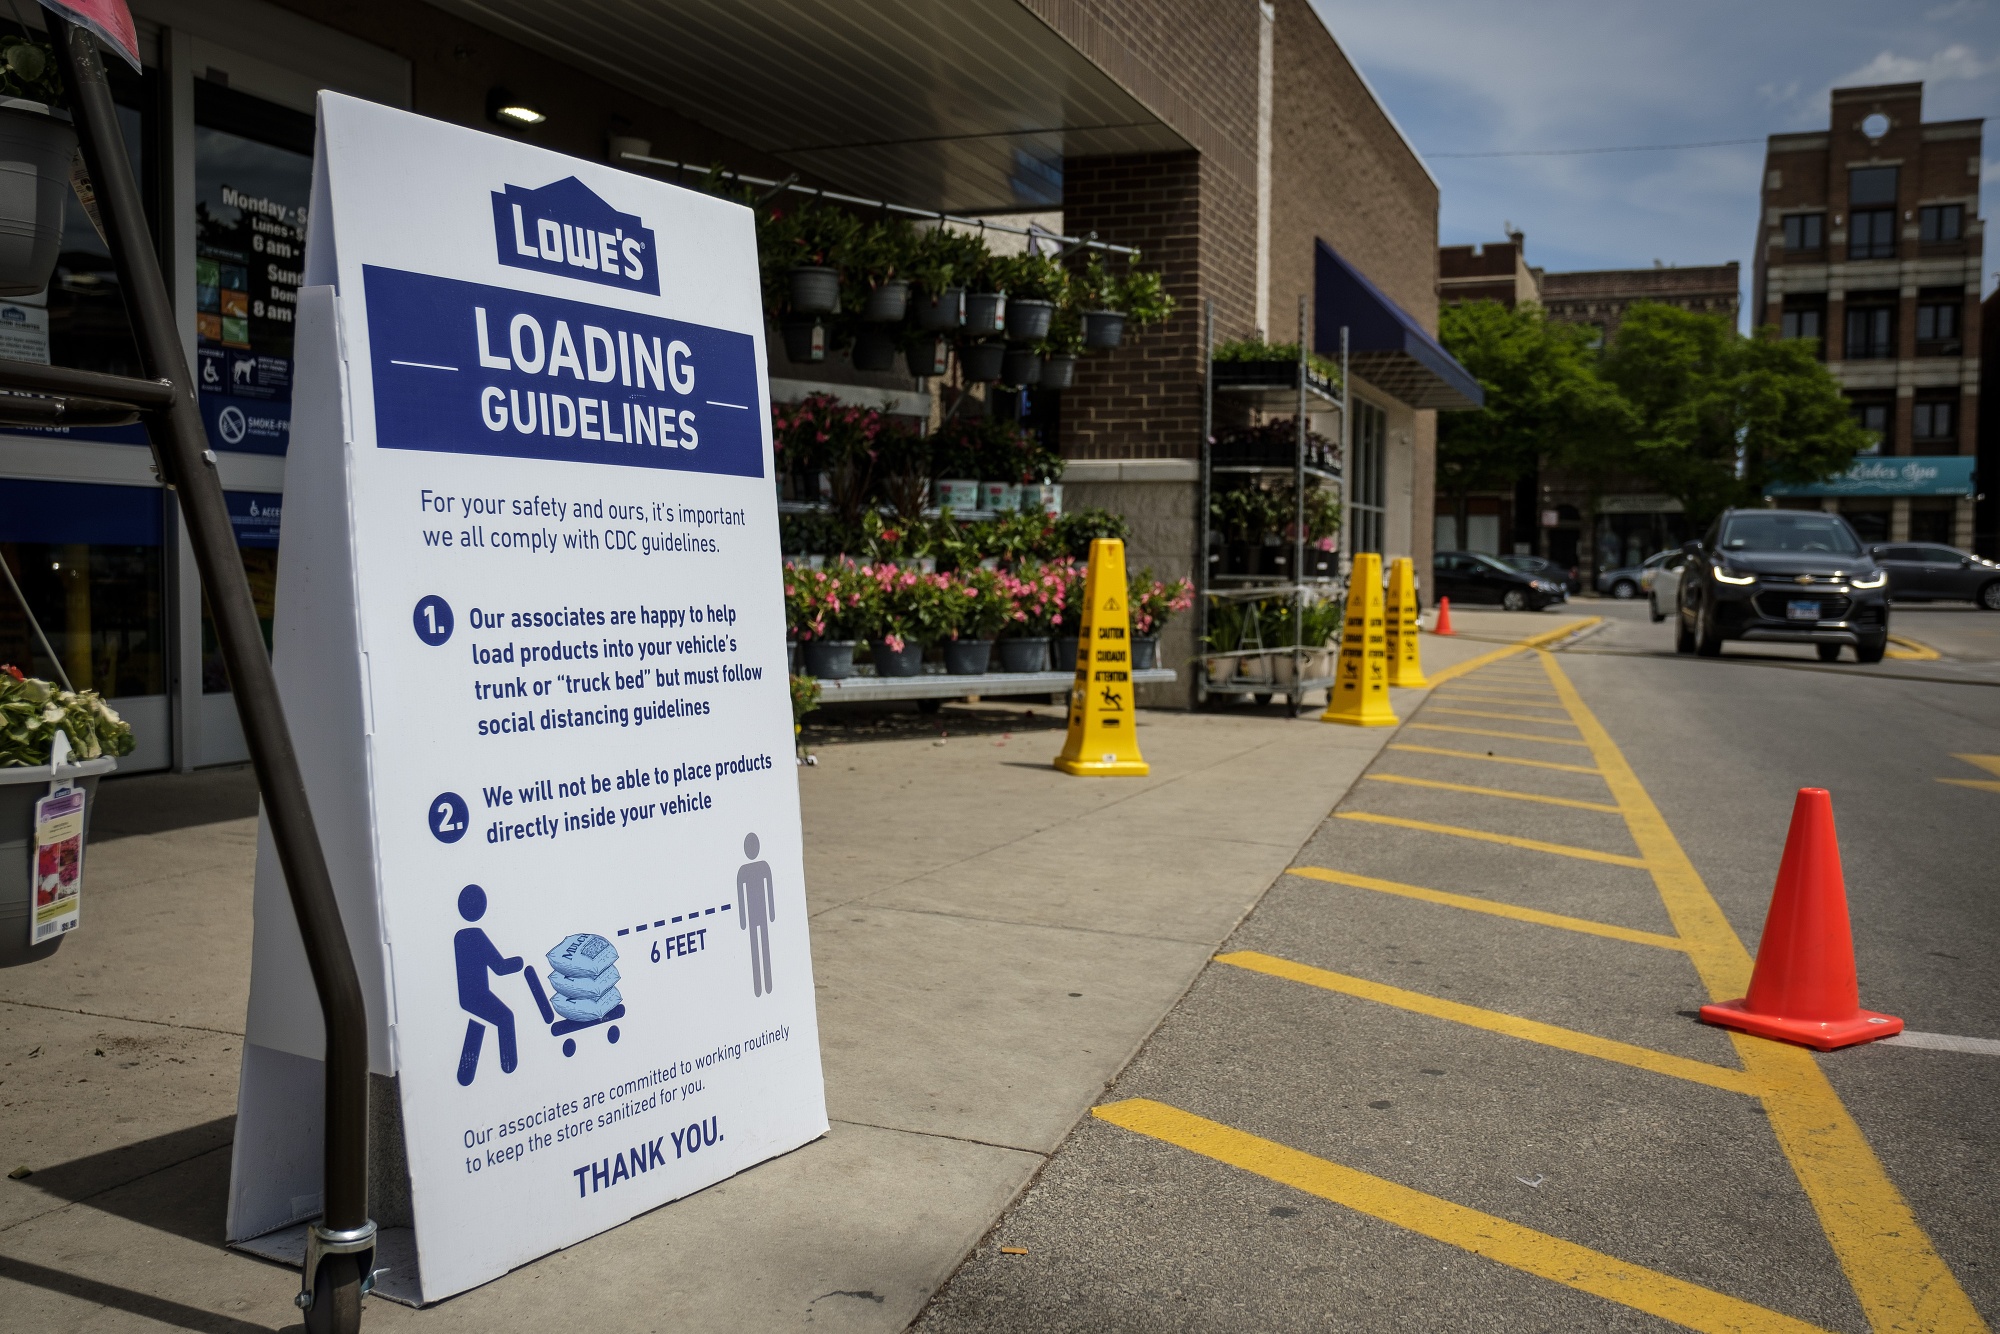 Home Depot, Lowe's Visits Surge During Coronavirus Quarantine Bloomberg